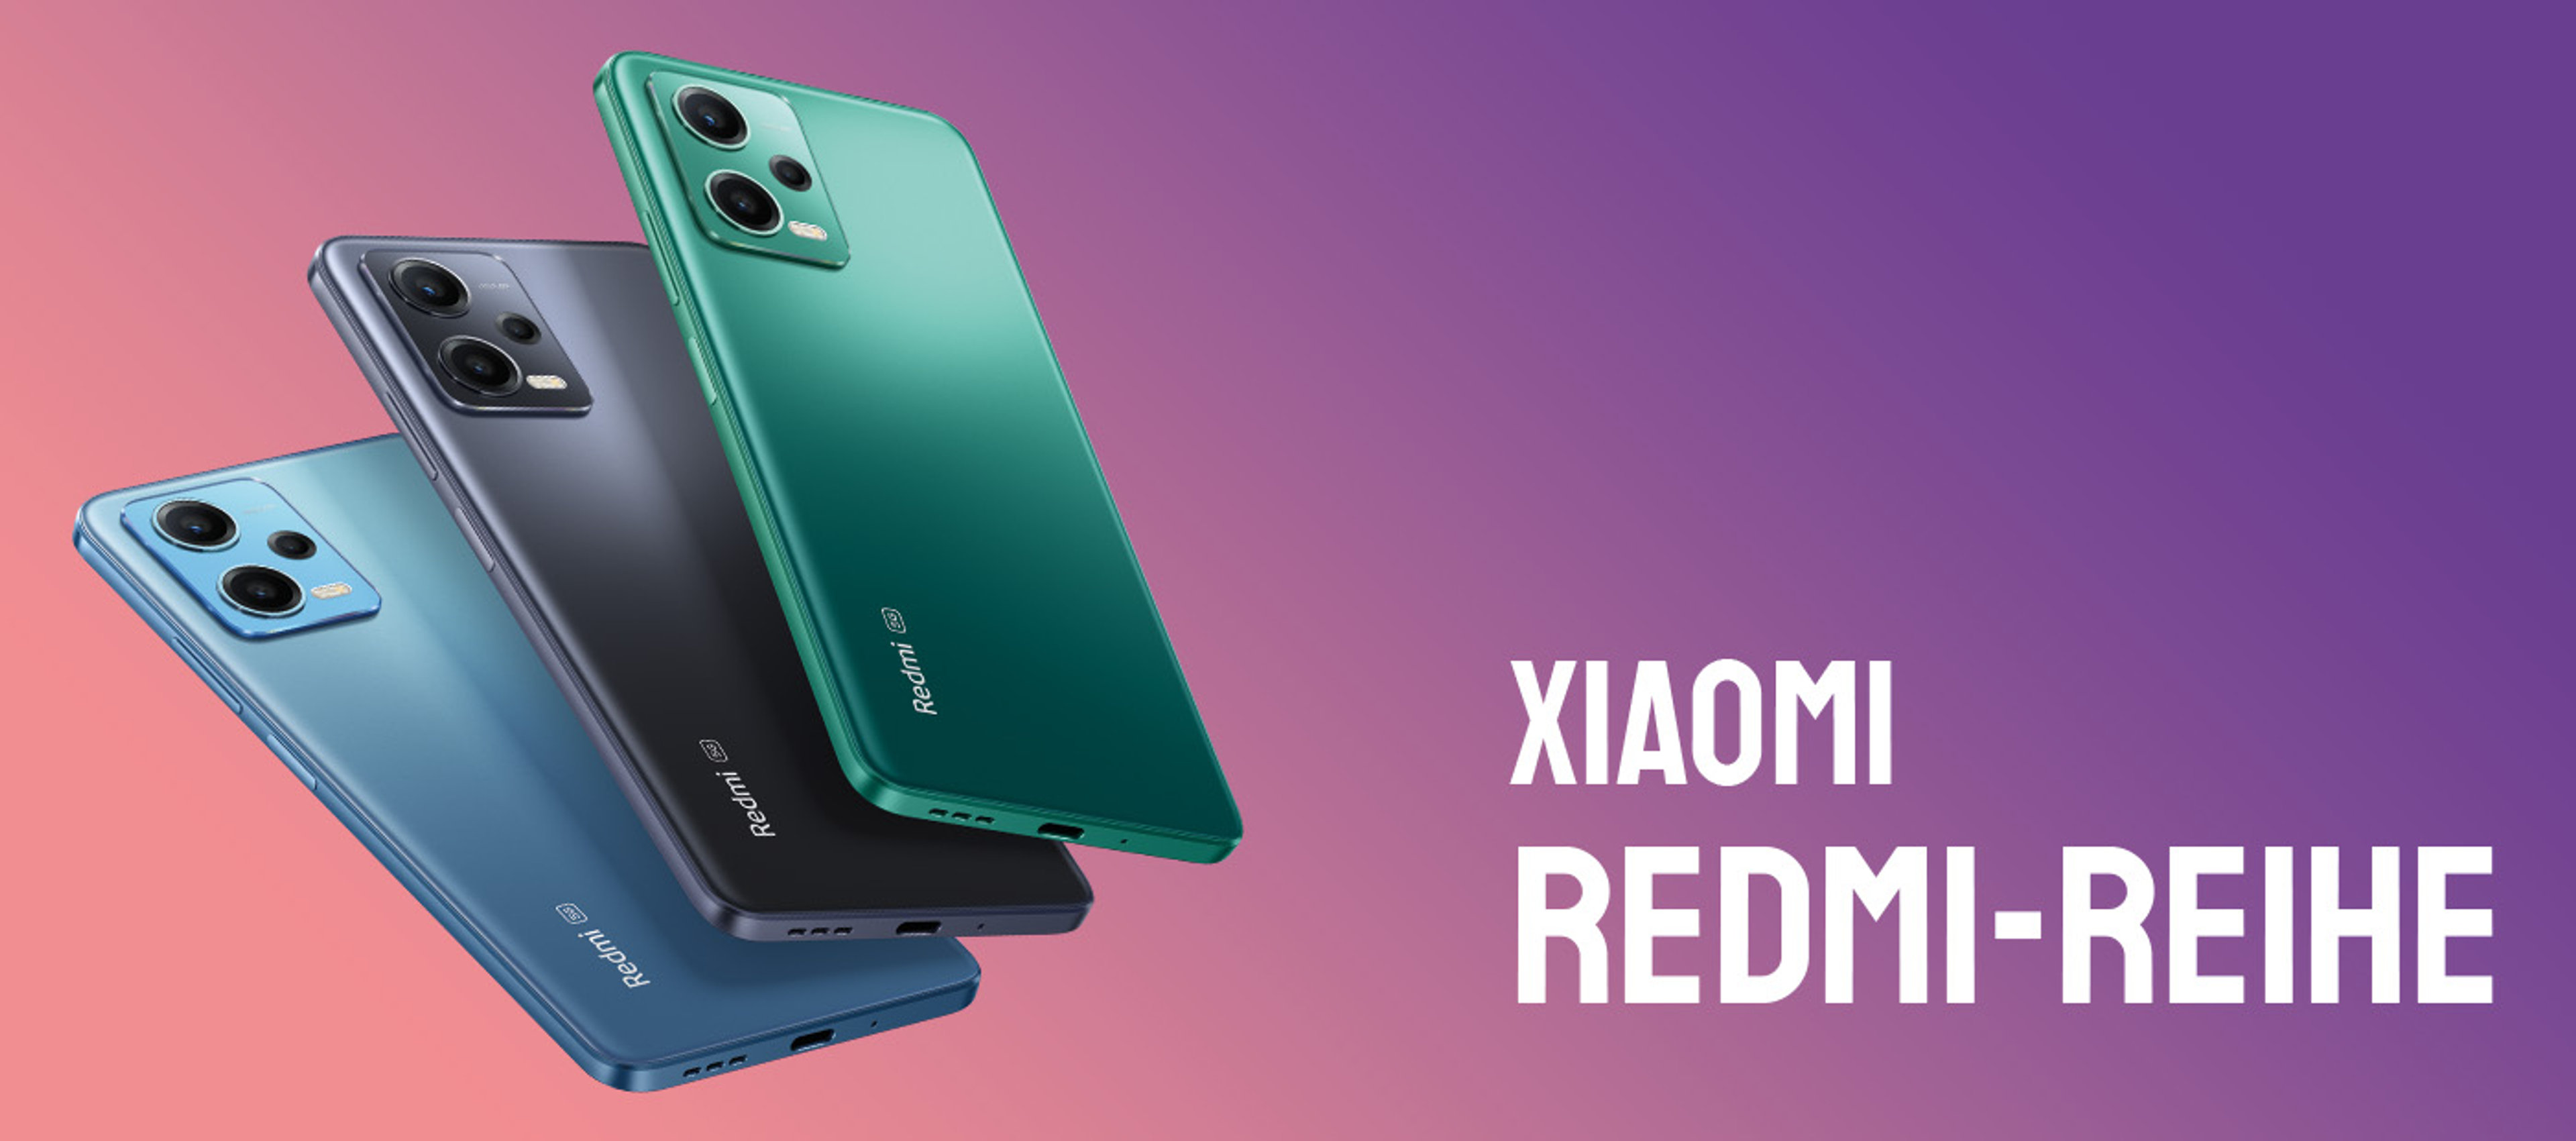 Smartphones - Xiaomi - Redmi-Serie